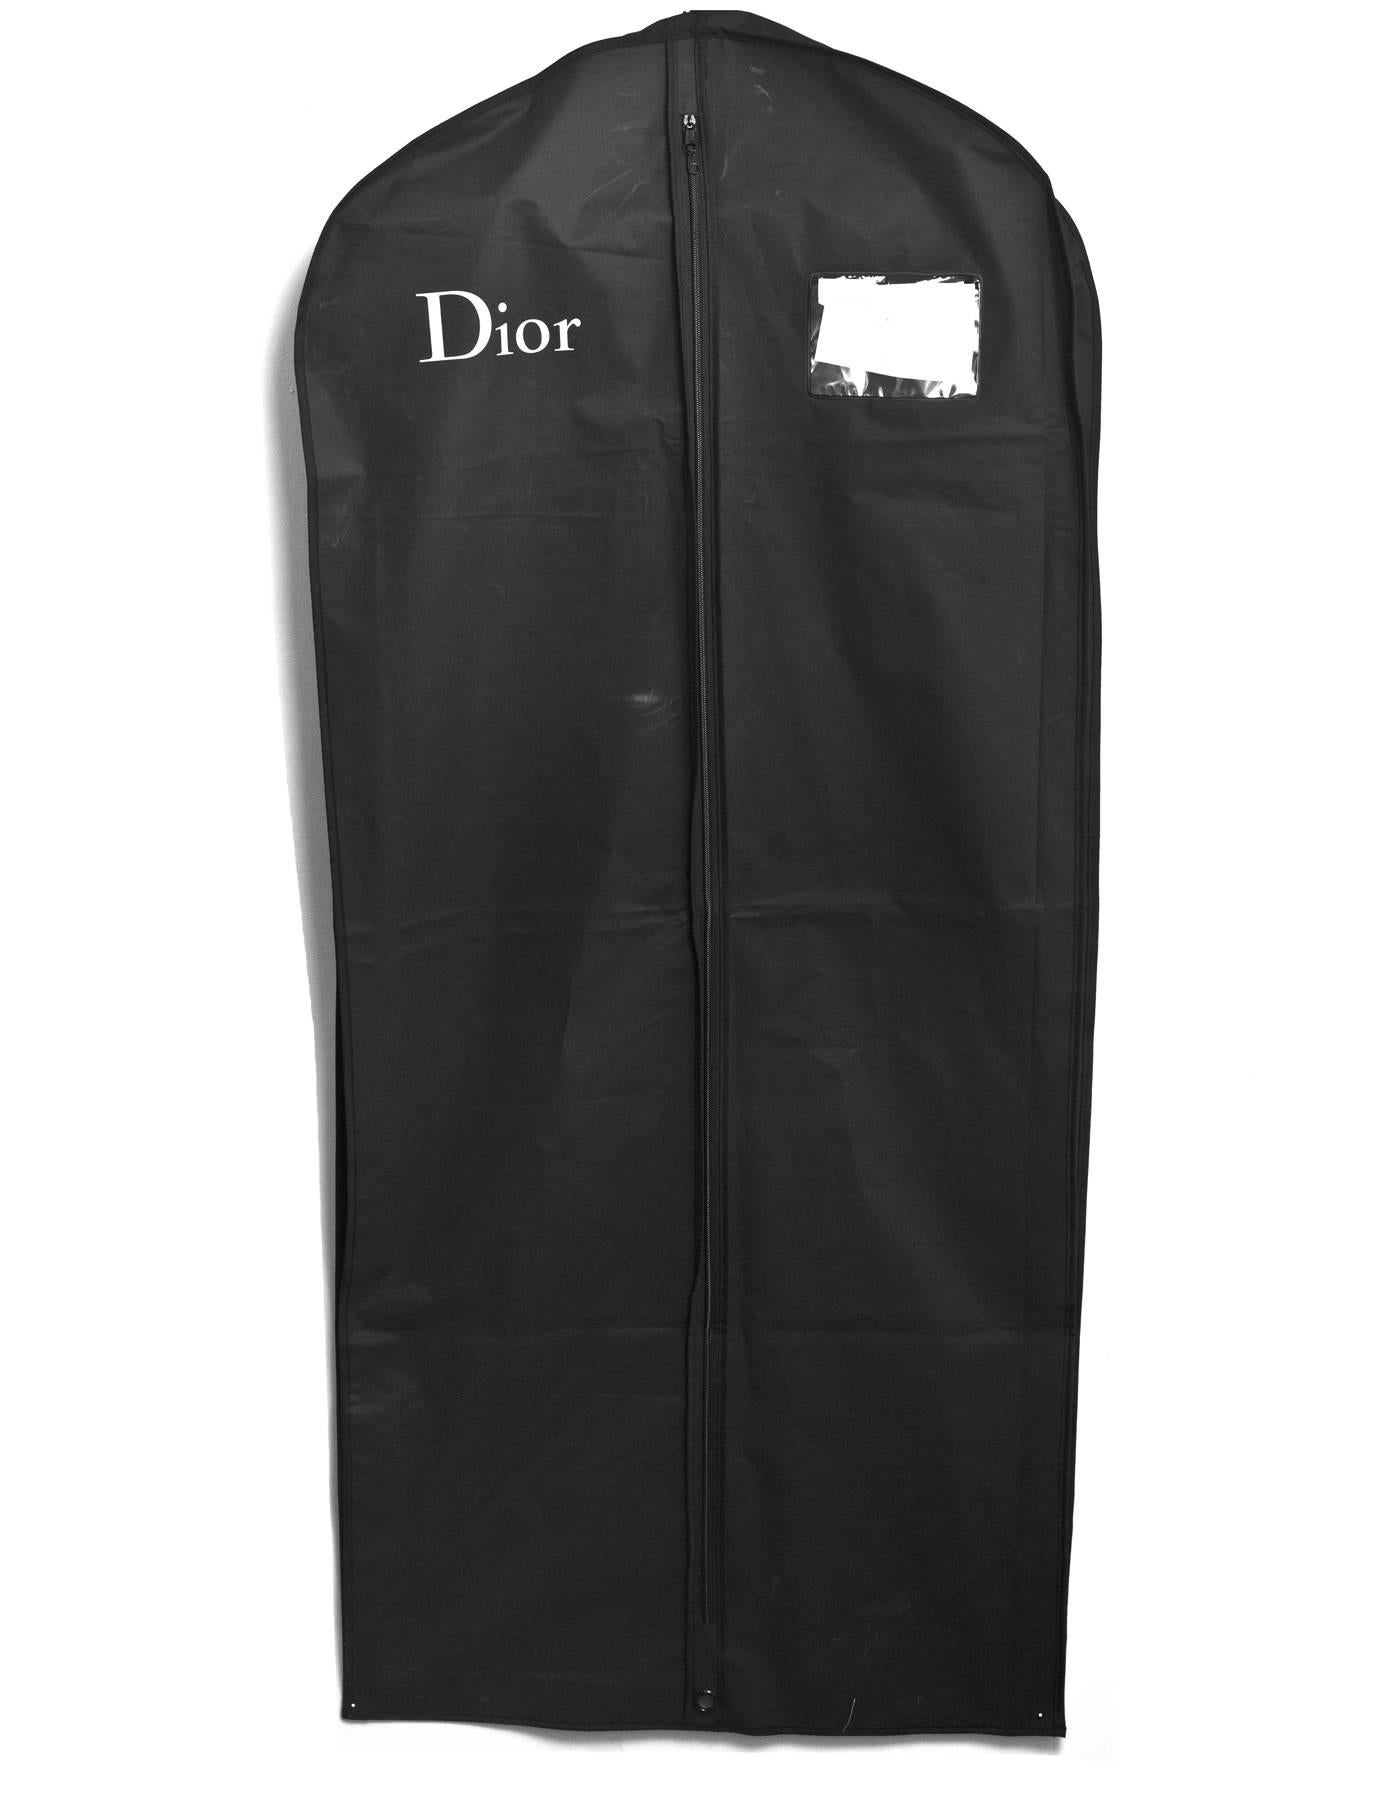 Christian Dior Black & White Textured Mesh Skater Dress sz US6 2